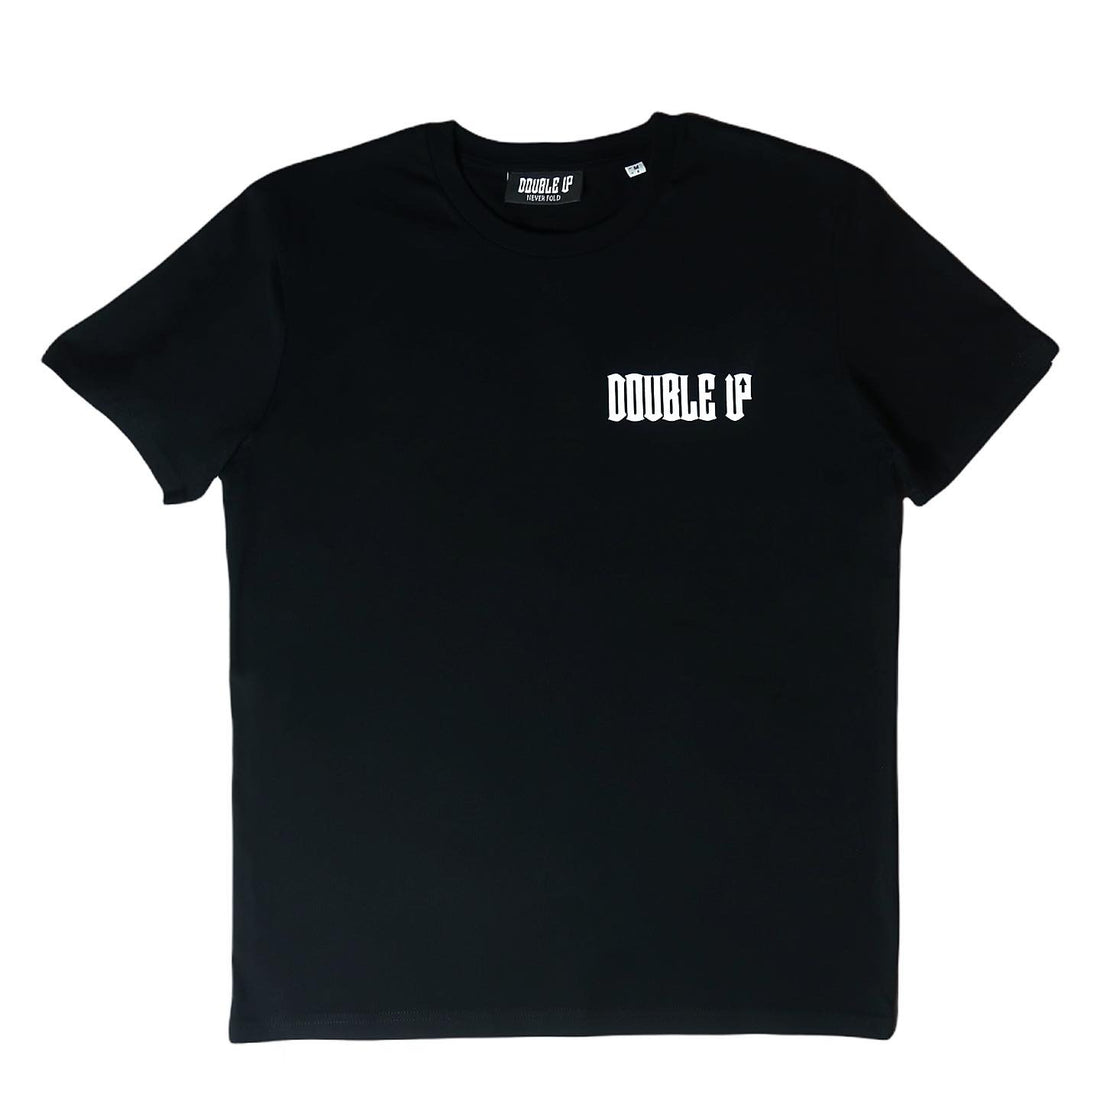 Double Up T-Shirt - Black/White